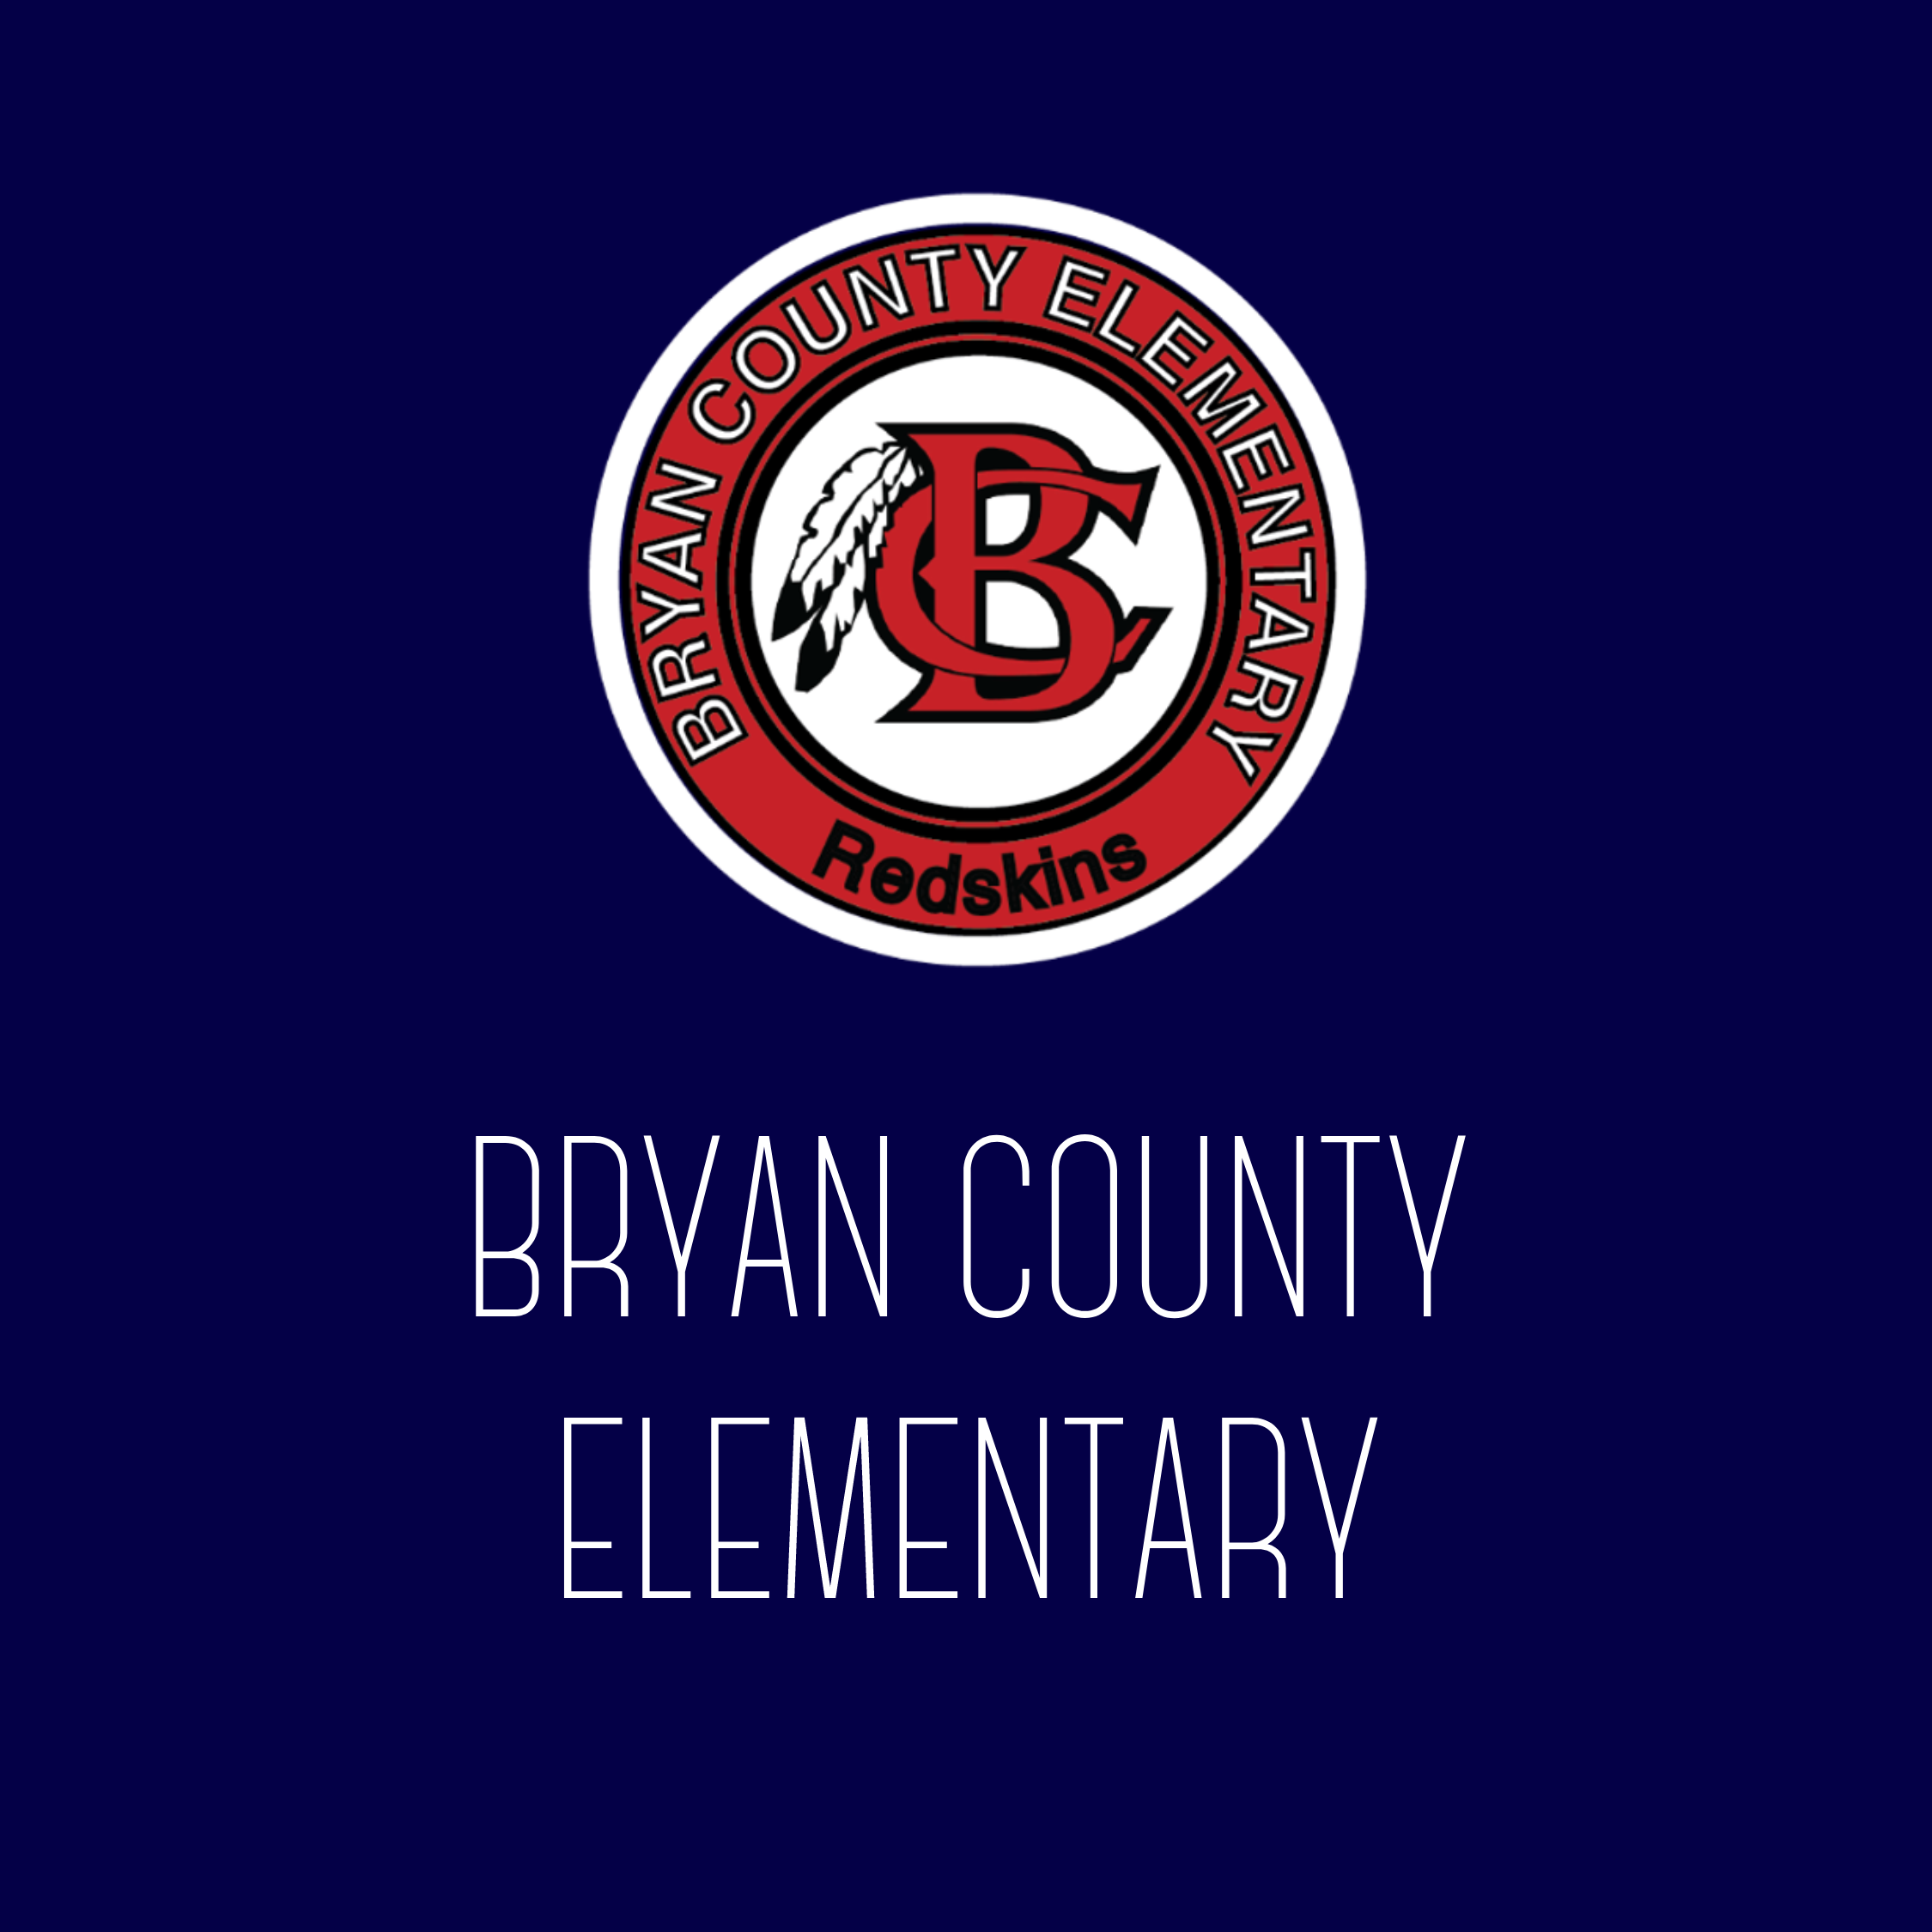 Bryan County Elementary